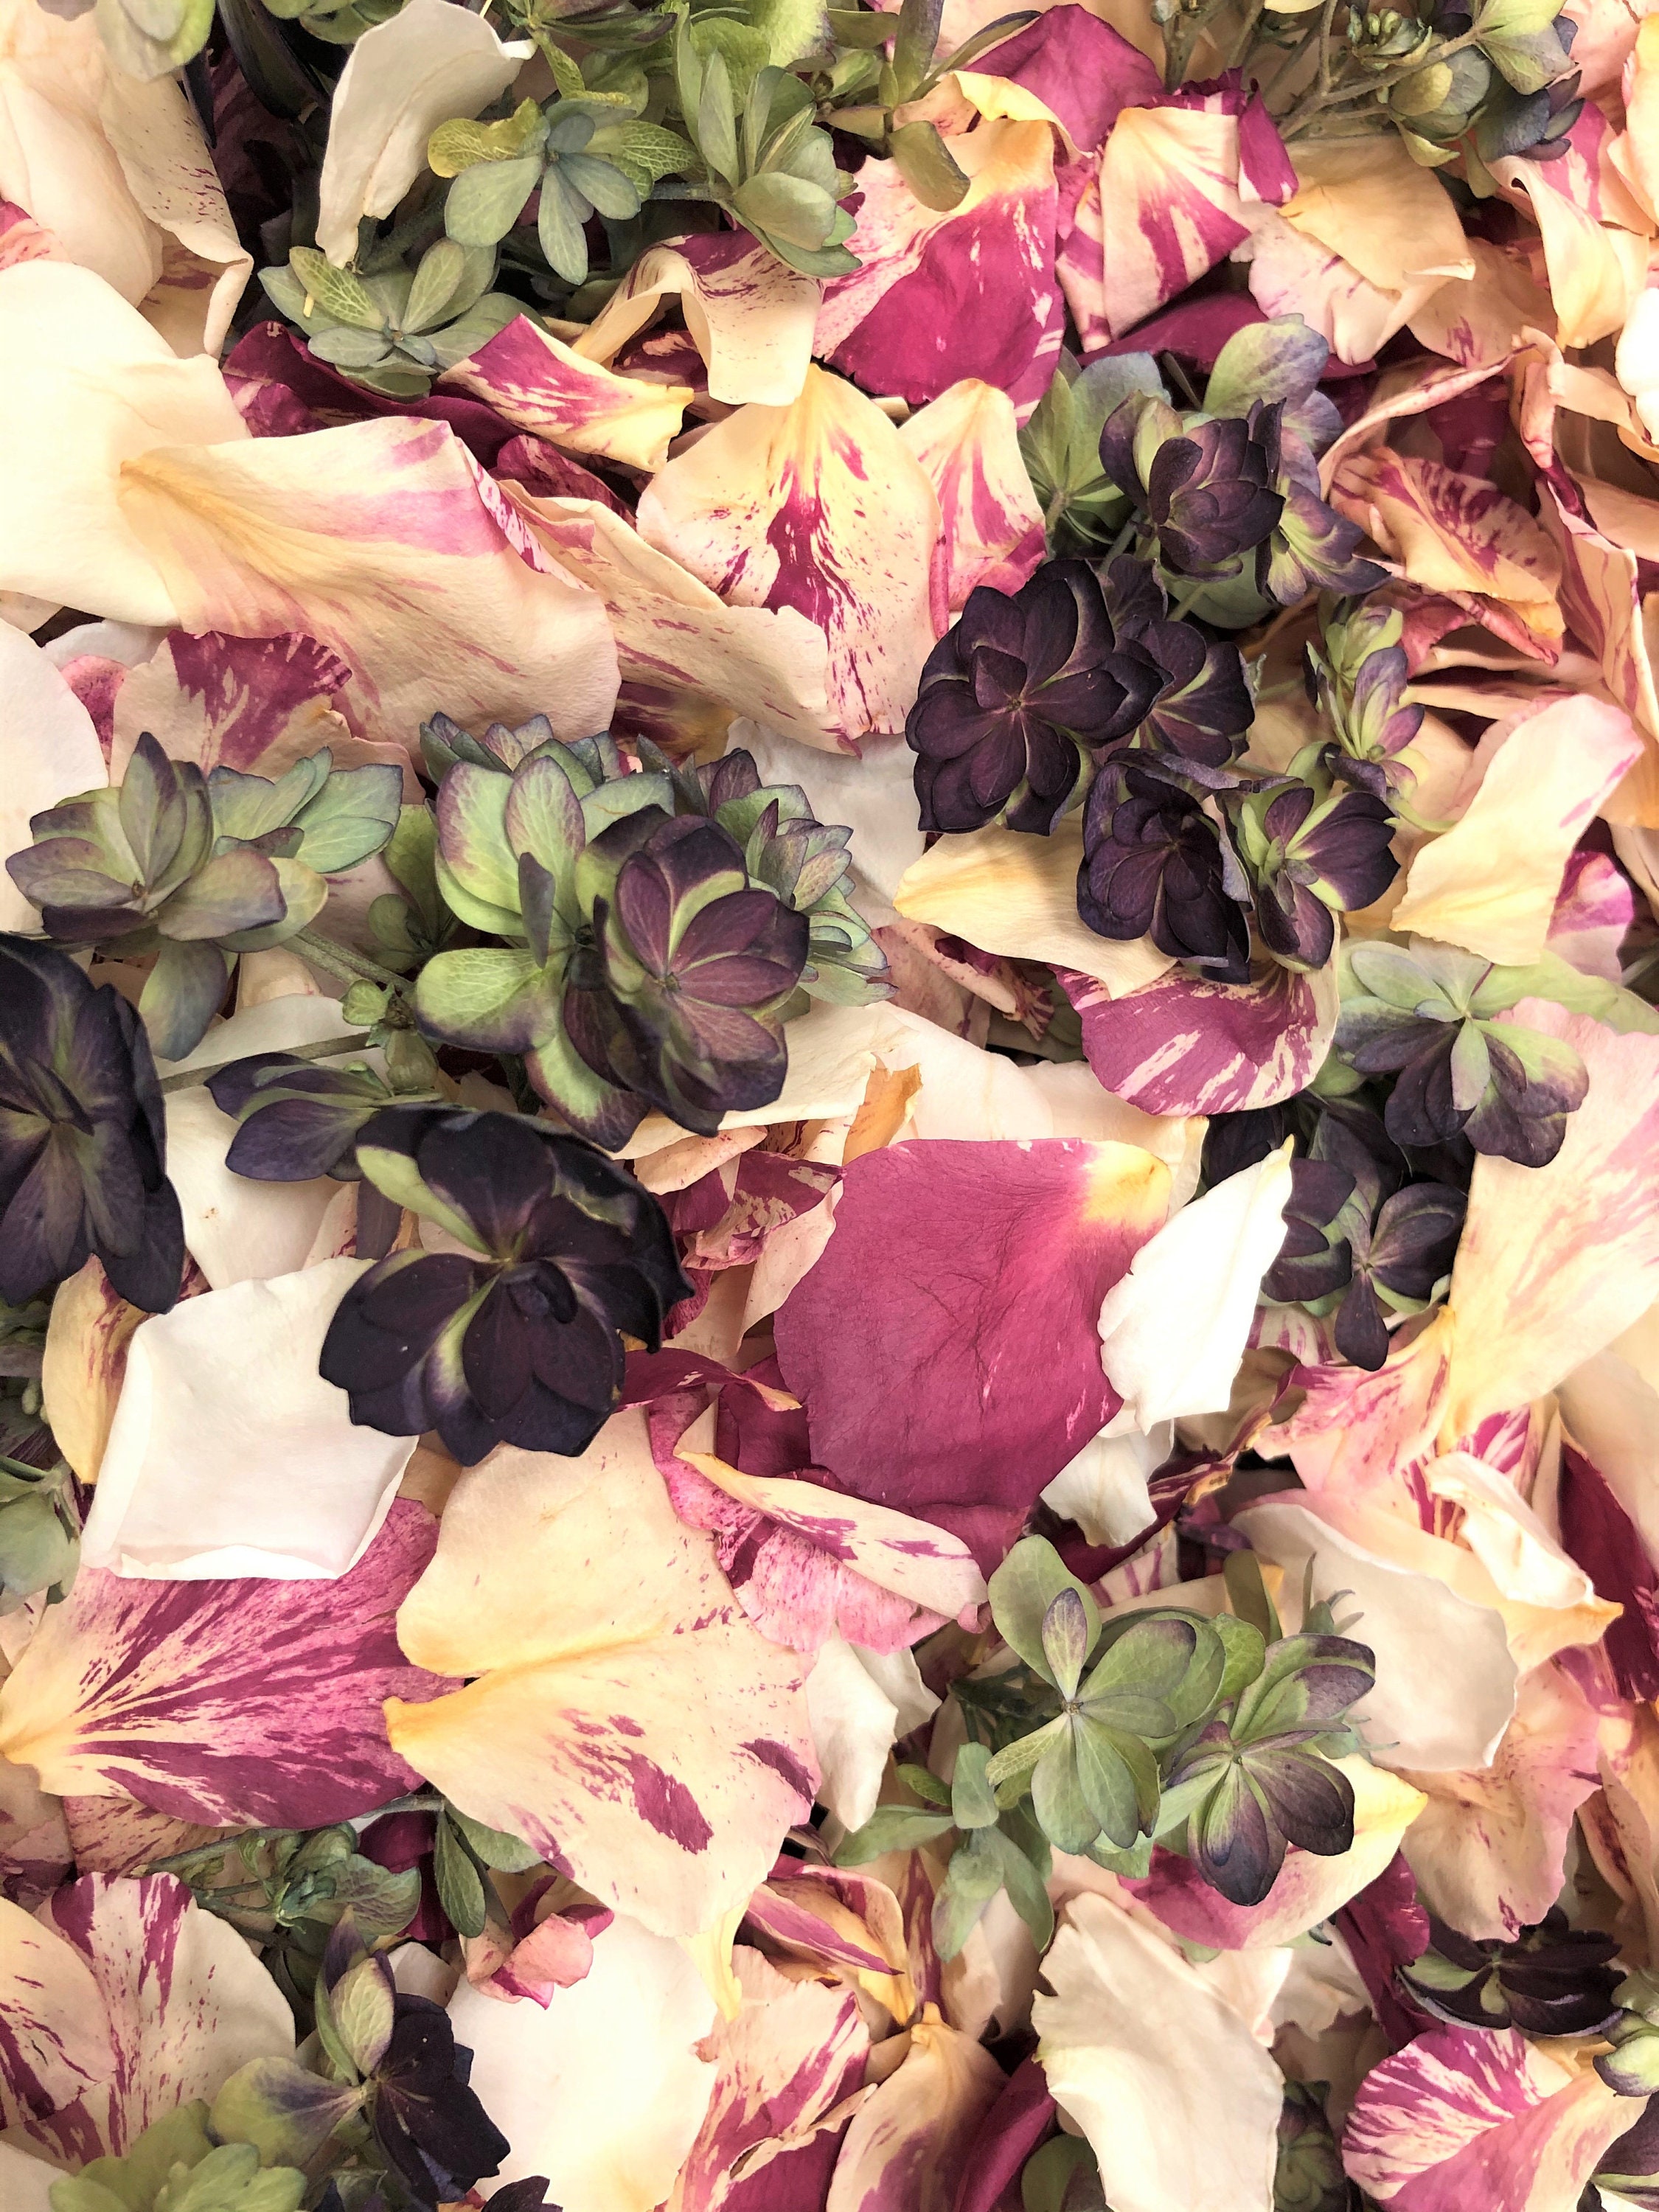 New 200 Cups Peppermint Twist Blend Rose & Hydrangea Petals. Real Petal Blend. Petals, Wedding Flower Confetti. Eco-Friendly